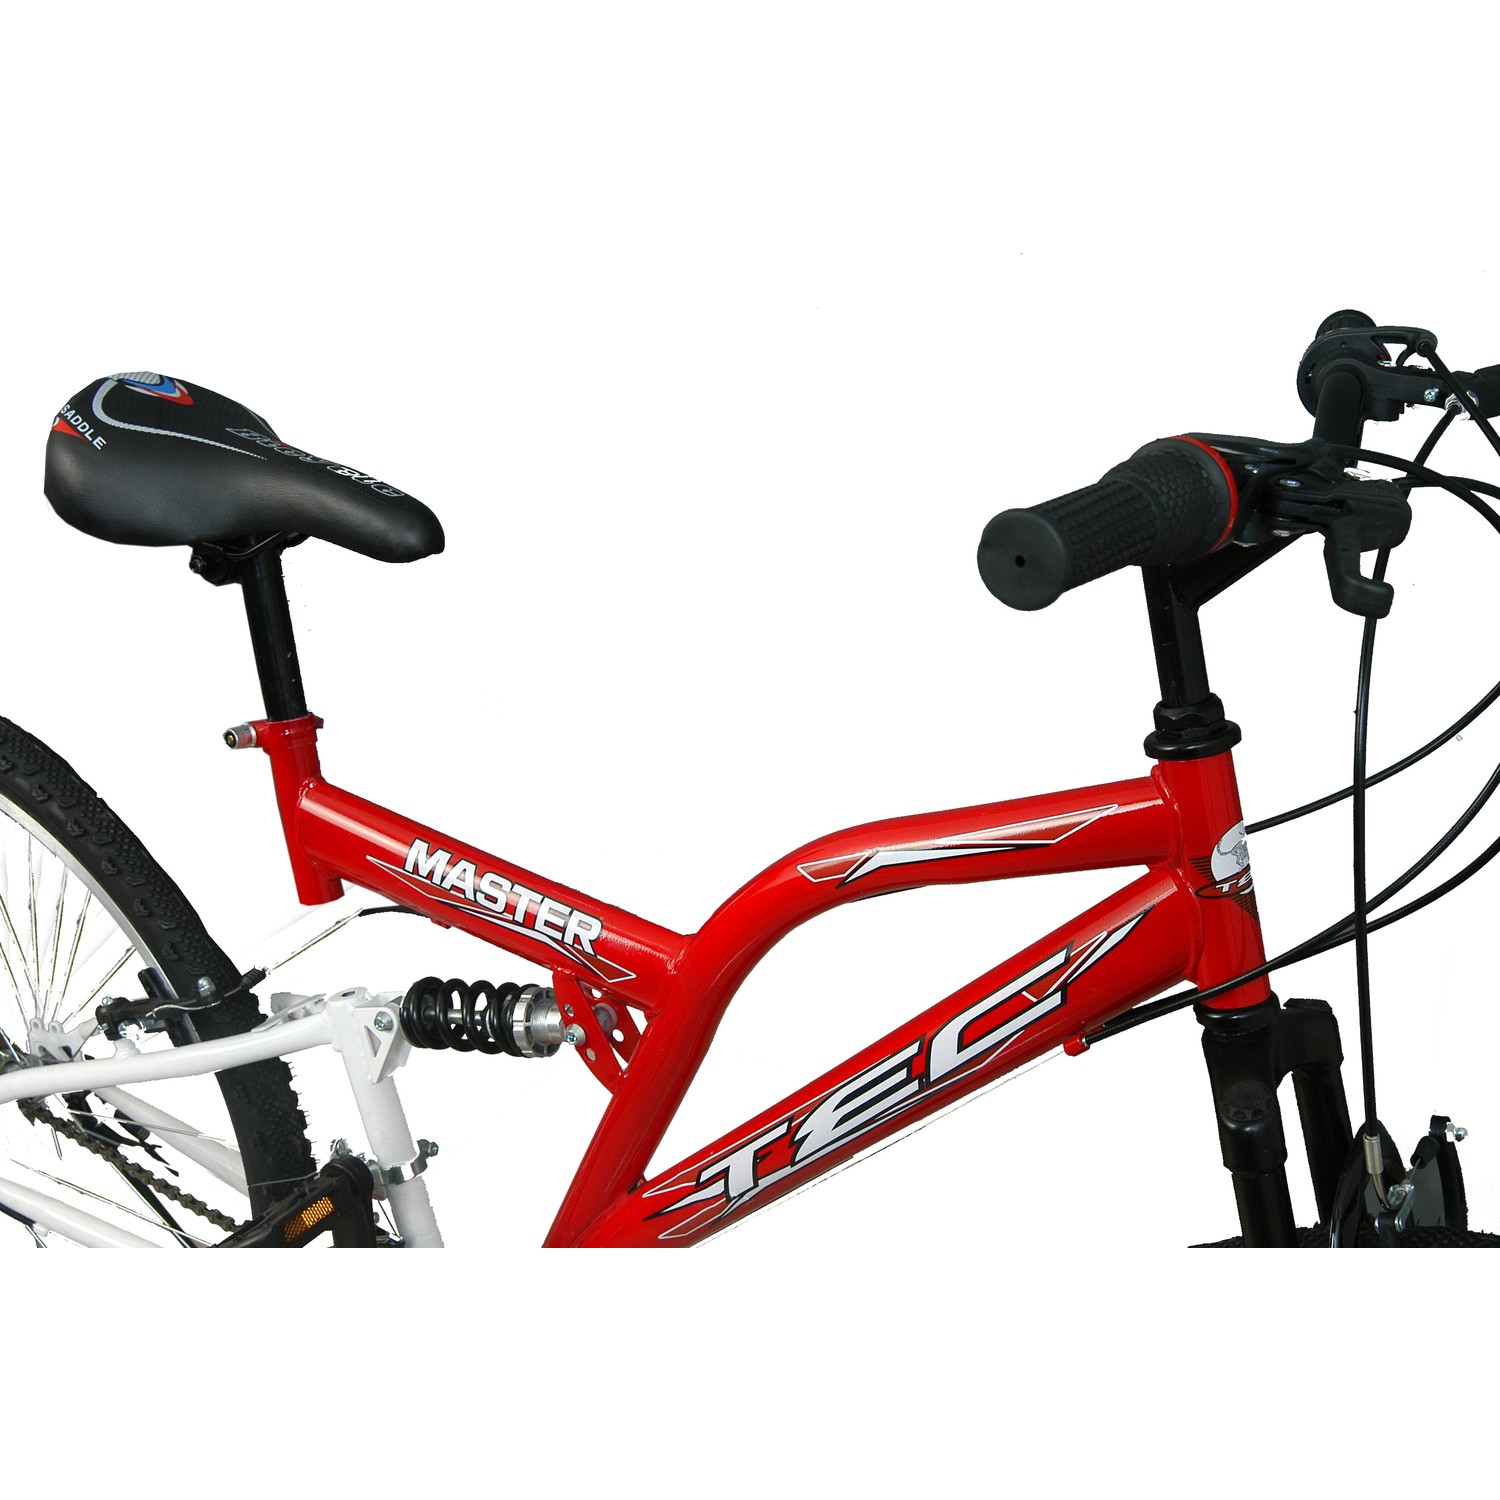 Master 26. Велосипед Belderia Tec Titan 26 (Black/Red). Belderia. Corsa High quality Profi Tec. Лого Belderia.